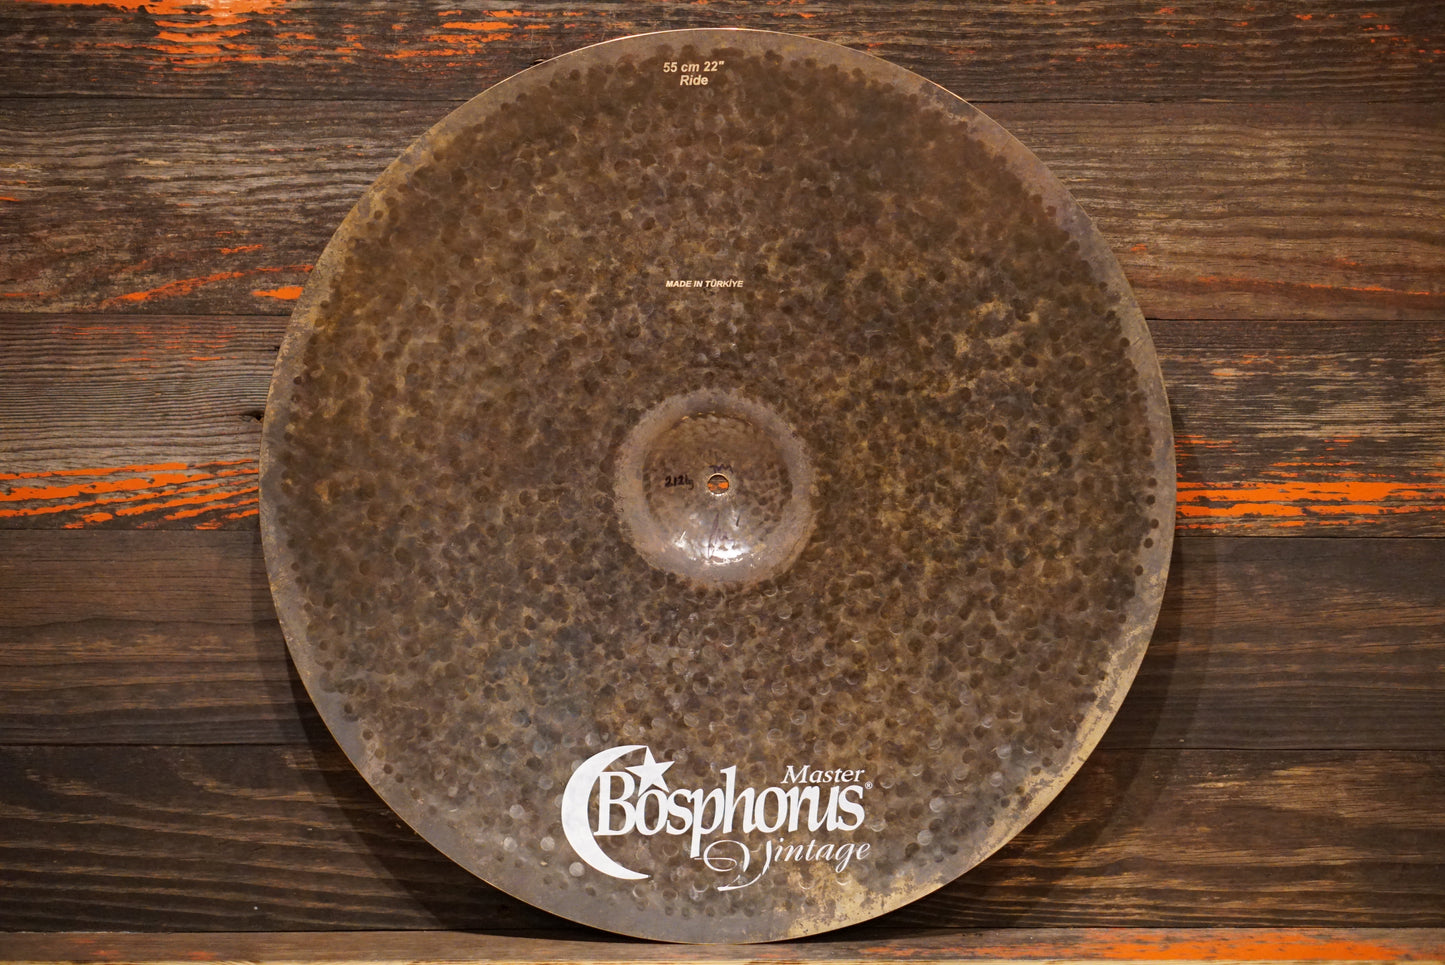 Bosphorus 22" Master Vintage Ride Cymbal - 2121g